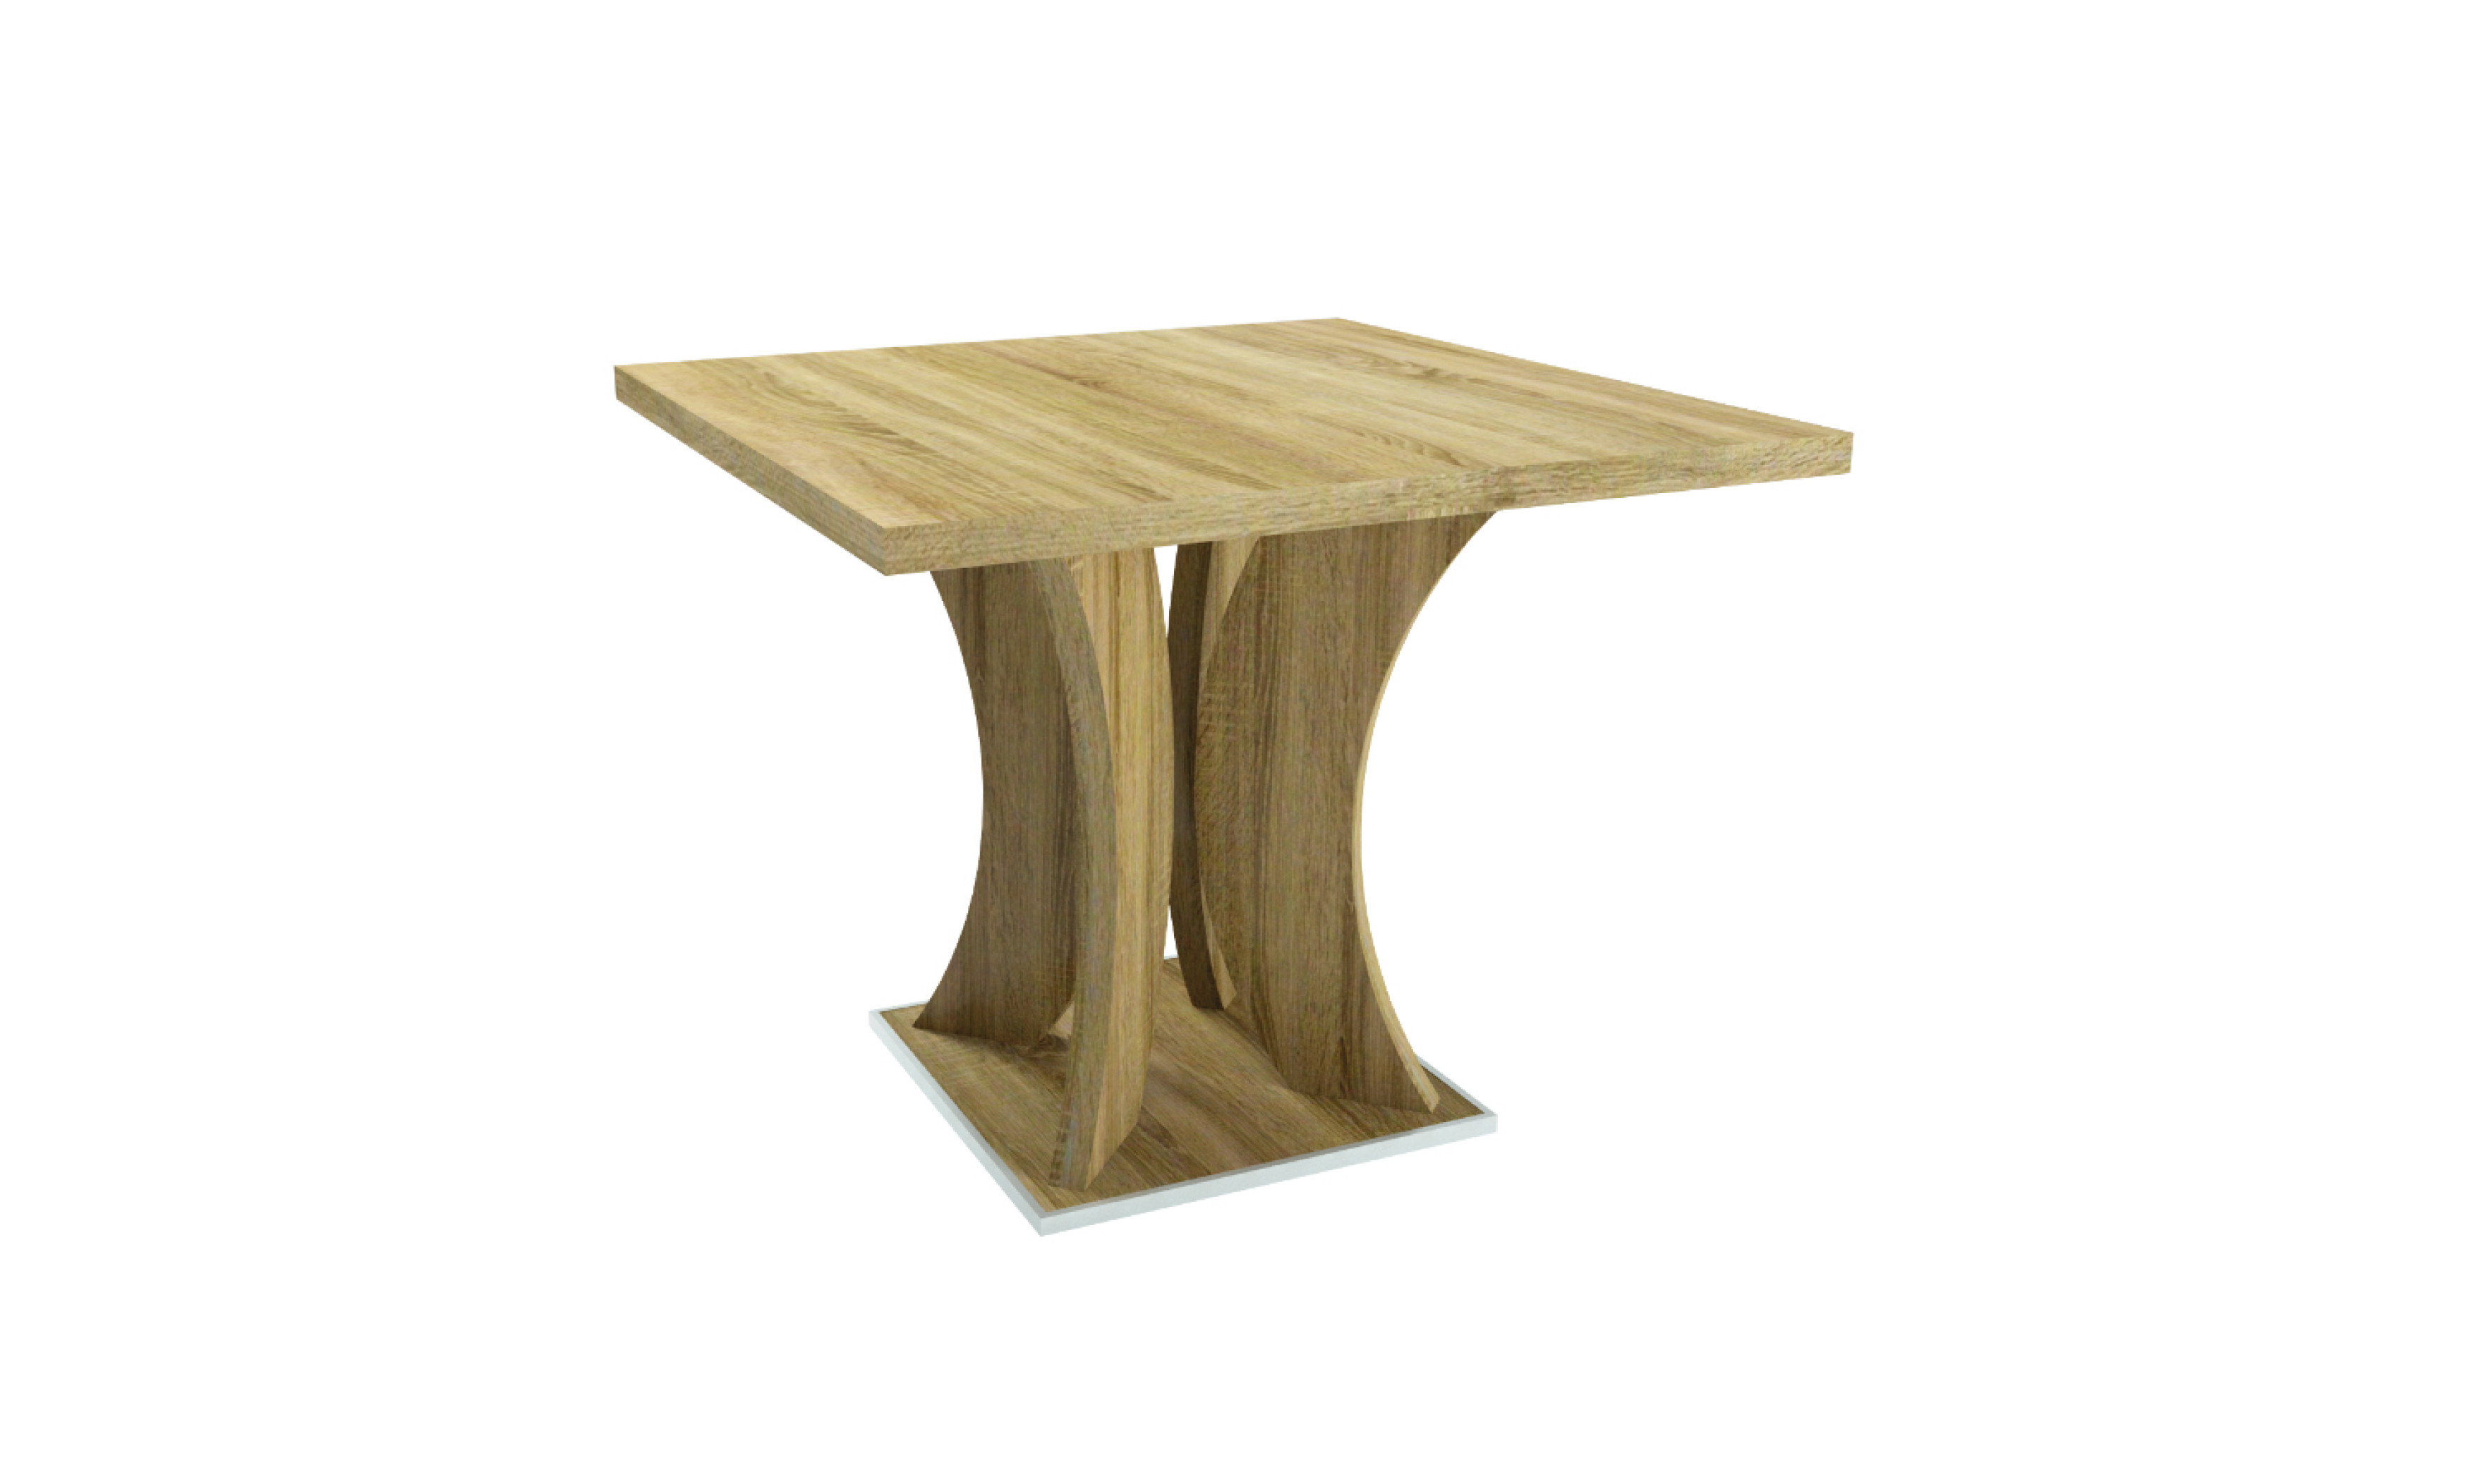 Bella asztal 90x90cm